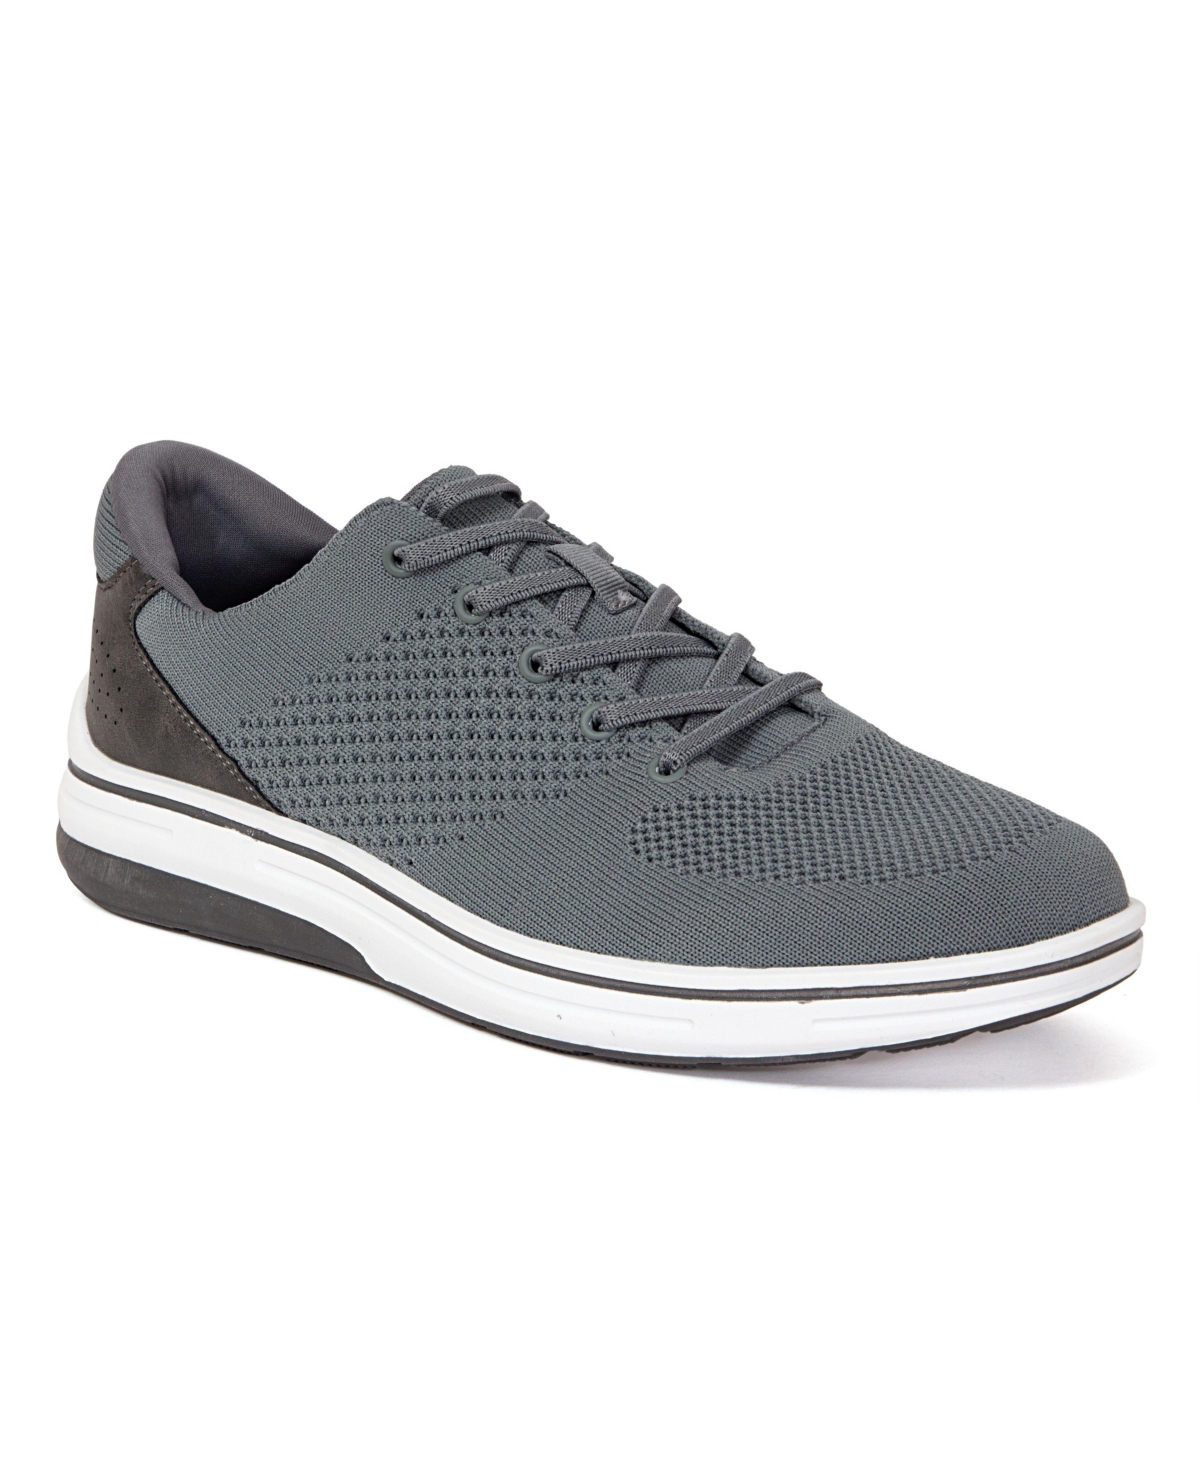 Men's Cortland Comfort Fashion Sneakers - Gray